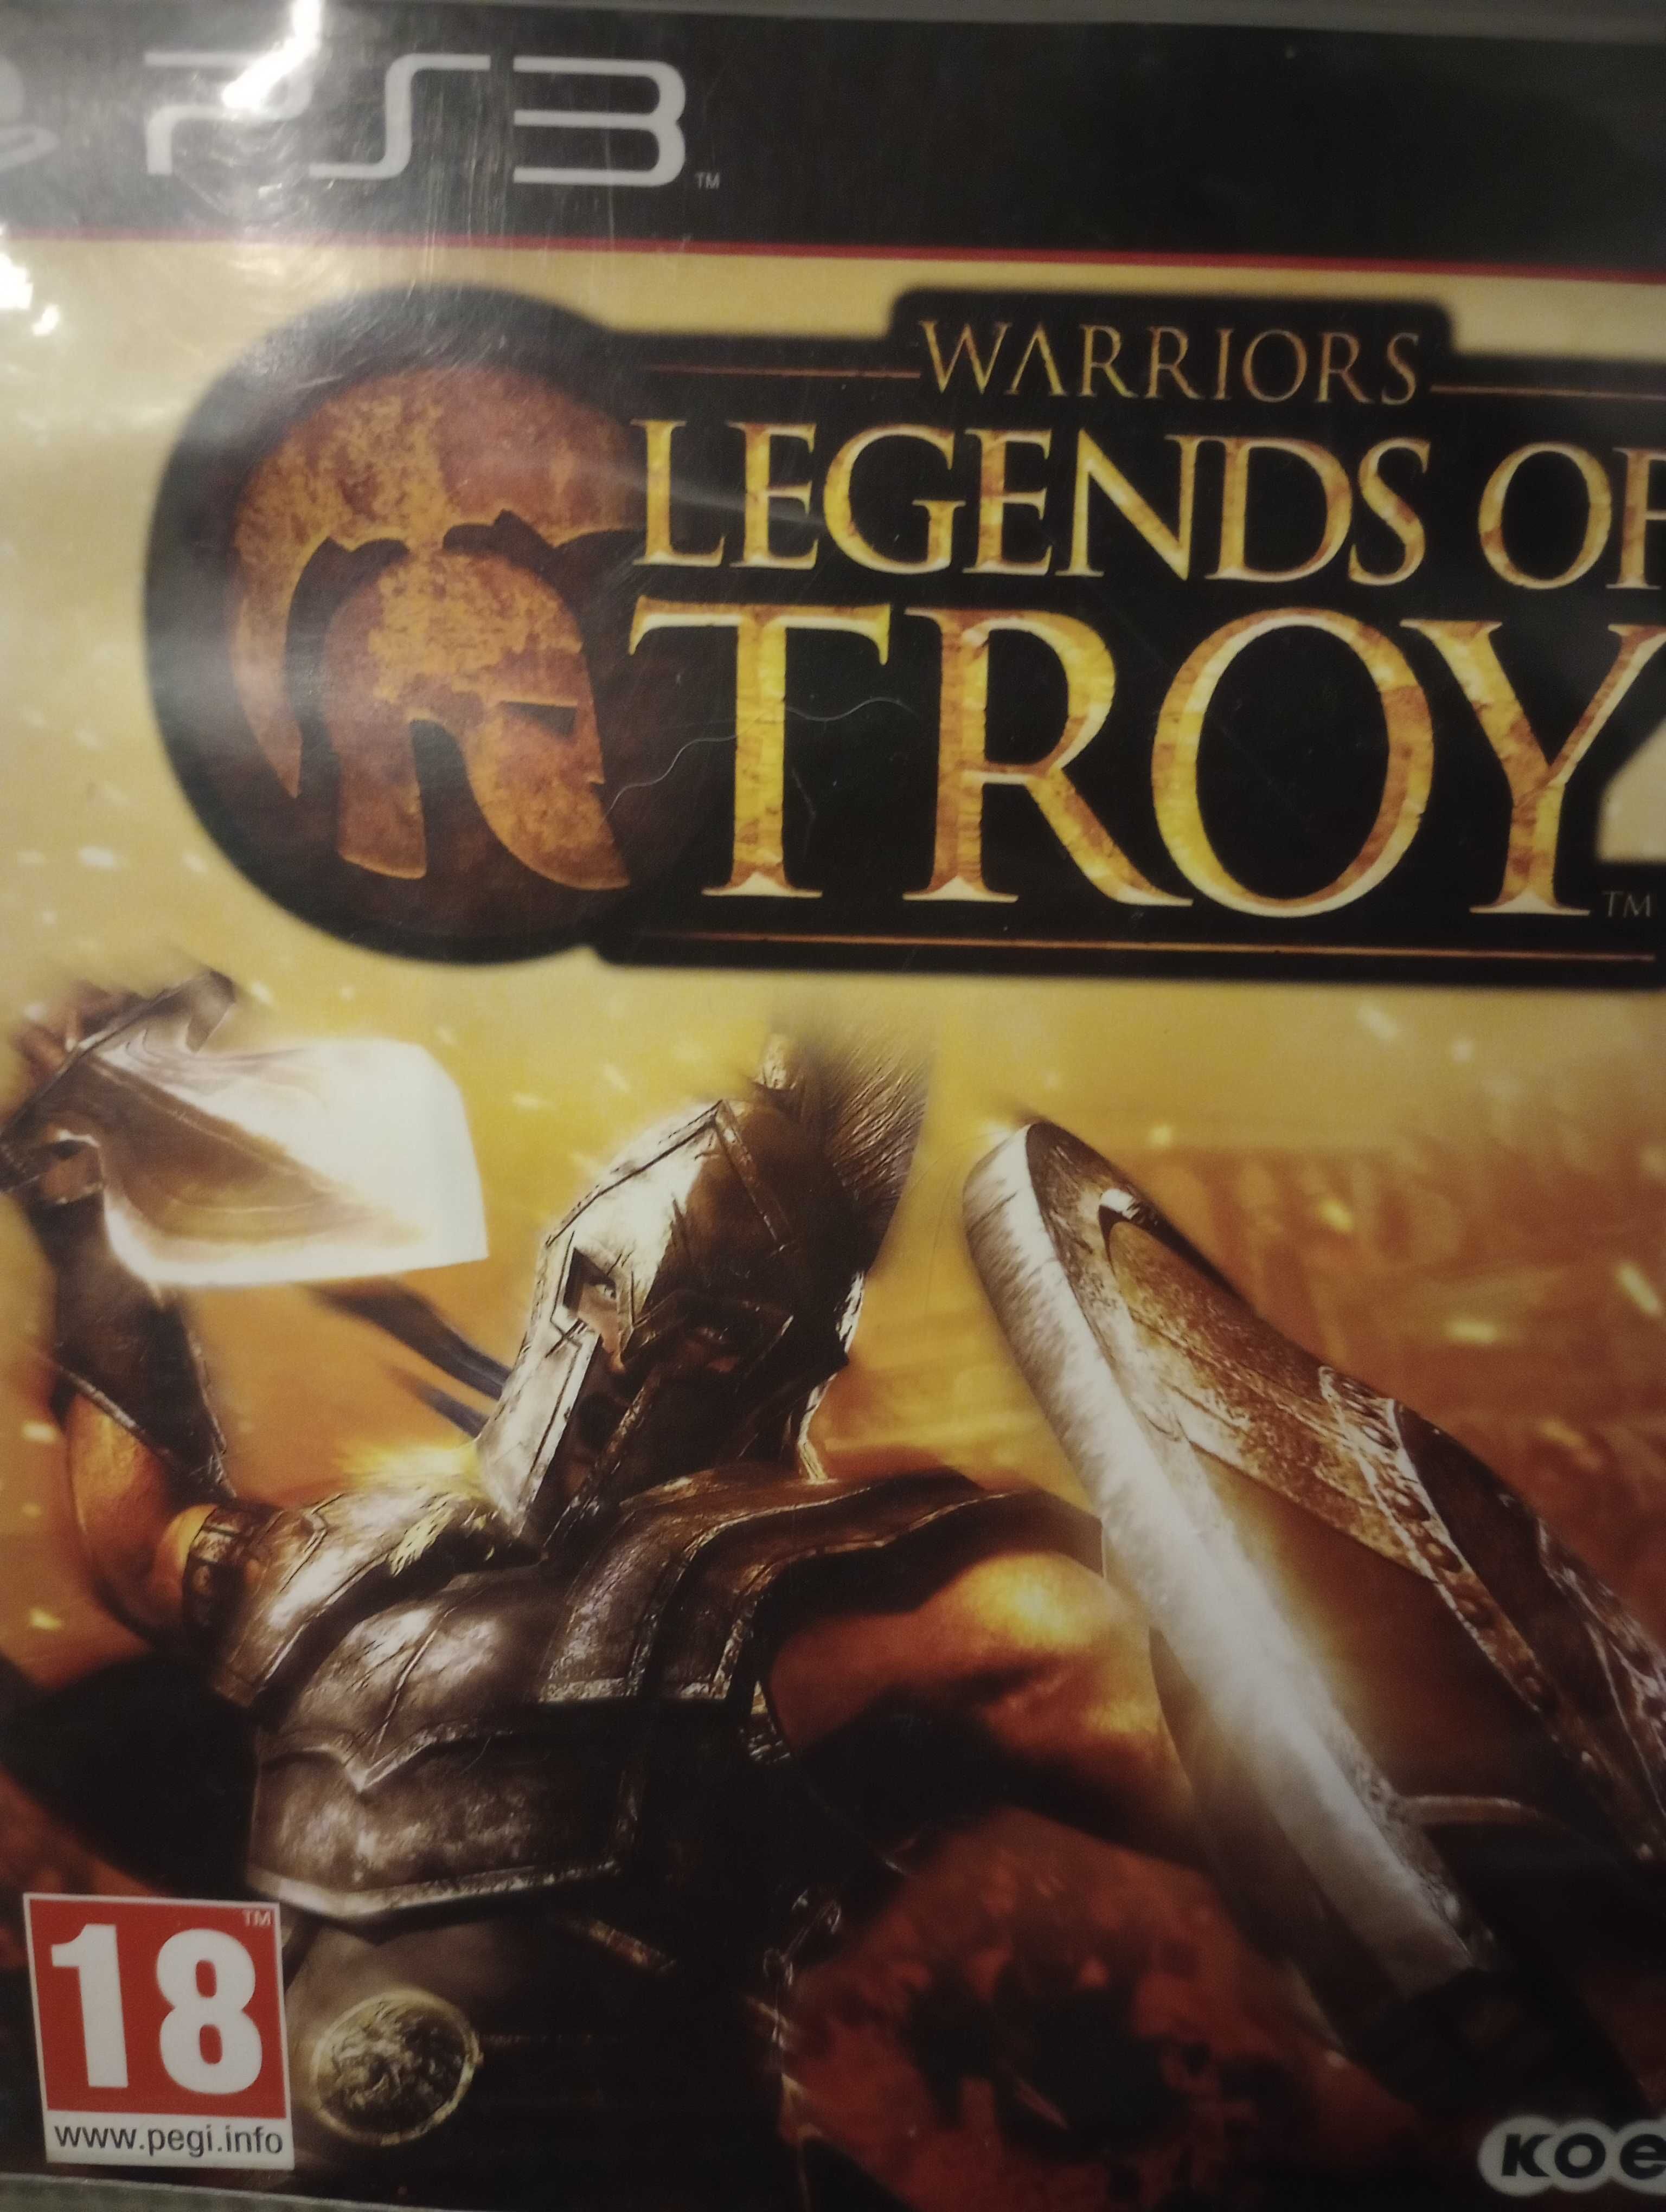 PS3 Legenda of Troy PlayStation 3